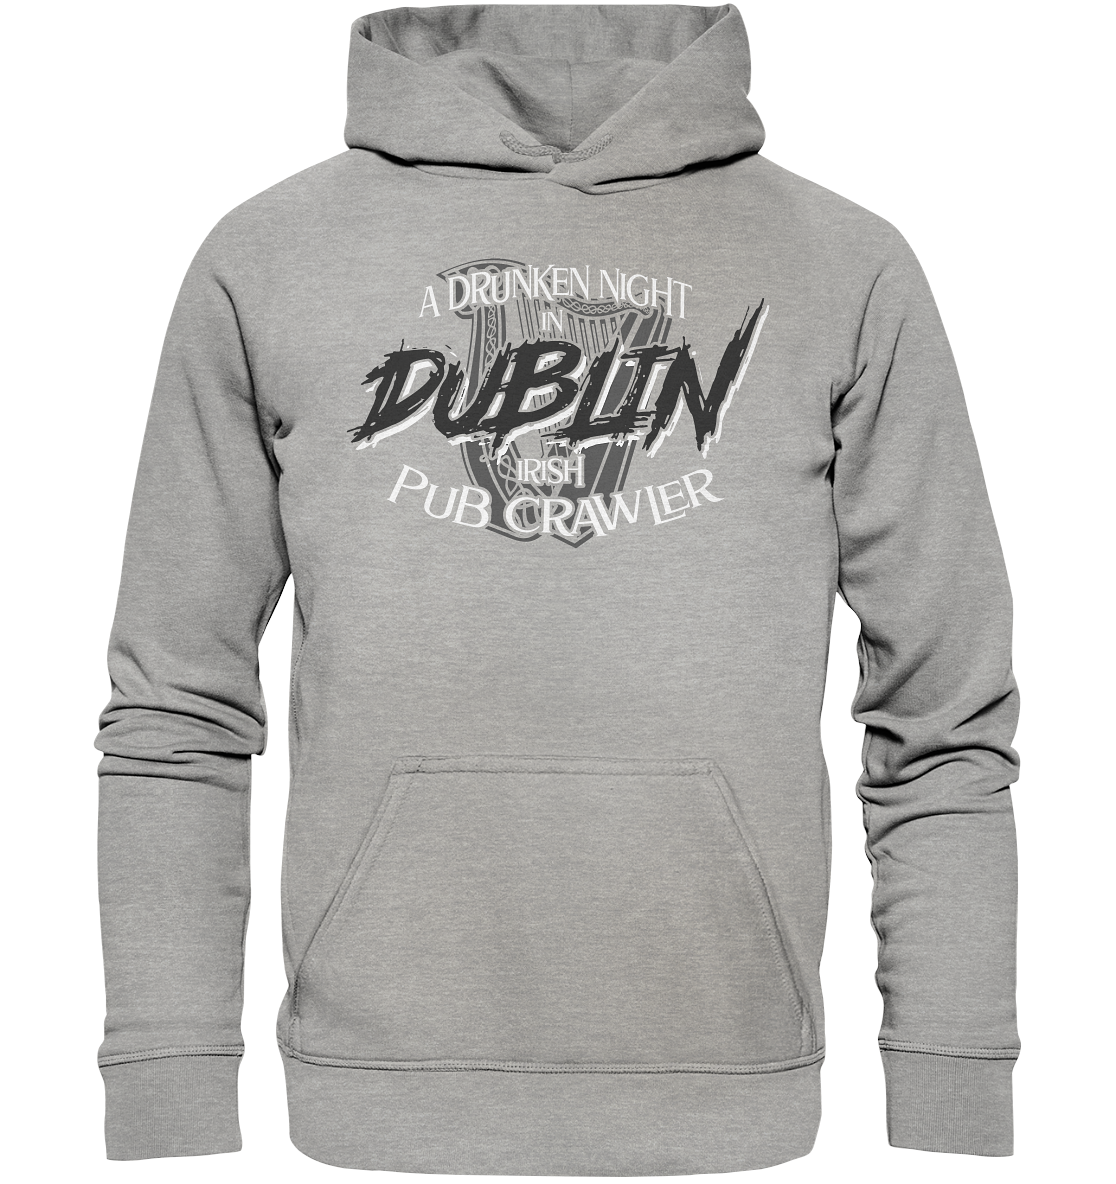 A Drunken Night In Dublin "Irish Pub Crawler" - Basic Unisex Hoodie